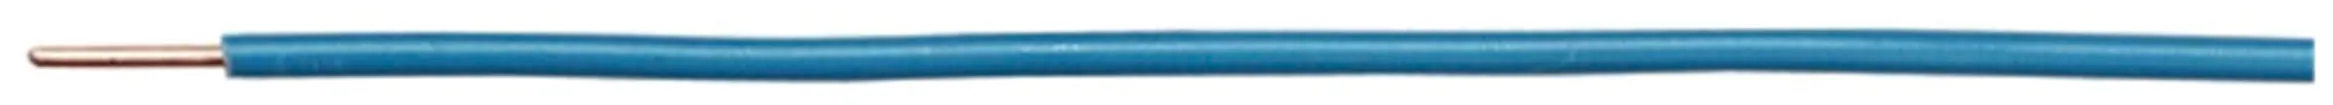 N-Draht H07Z1-U halogenfrei 1.5mm² 450/750V hellblau Cca 